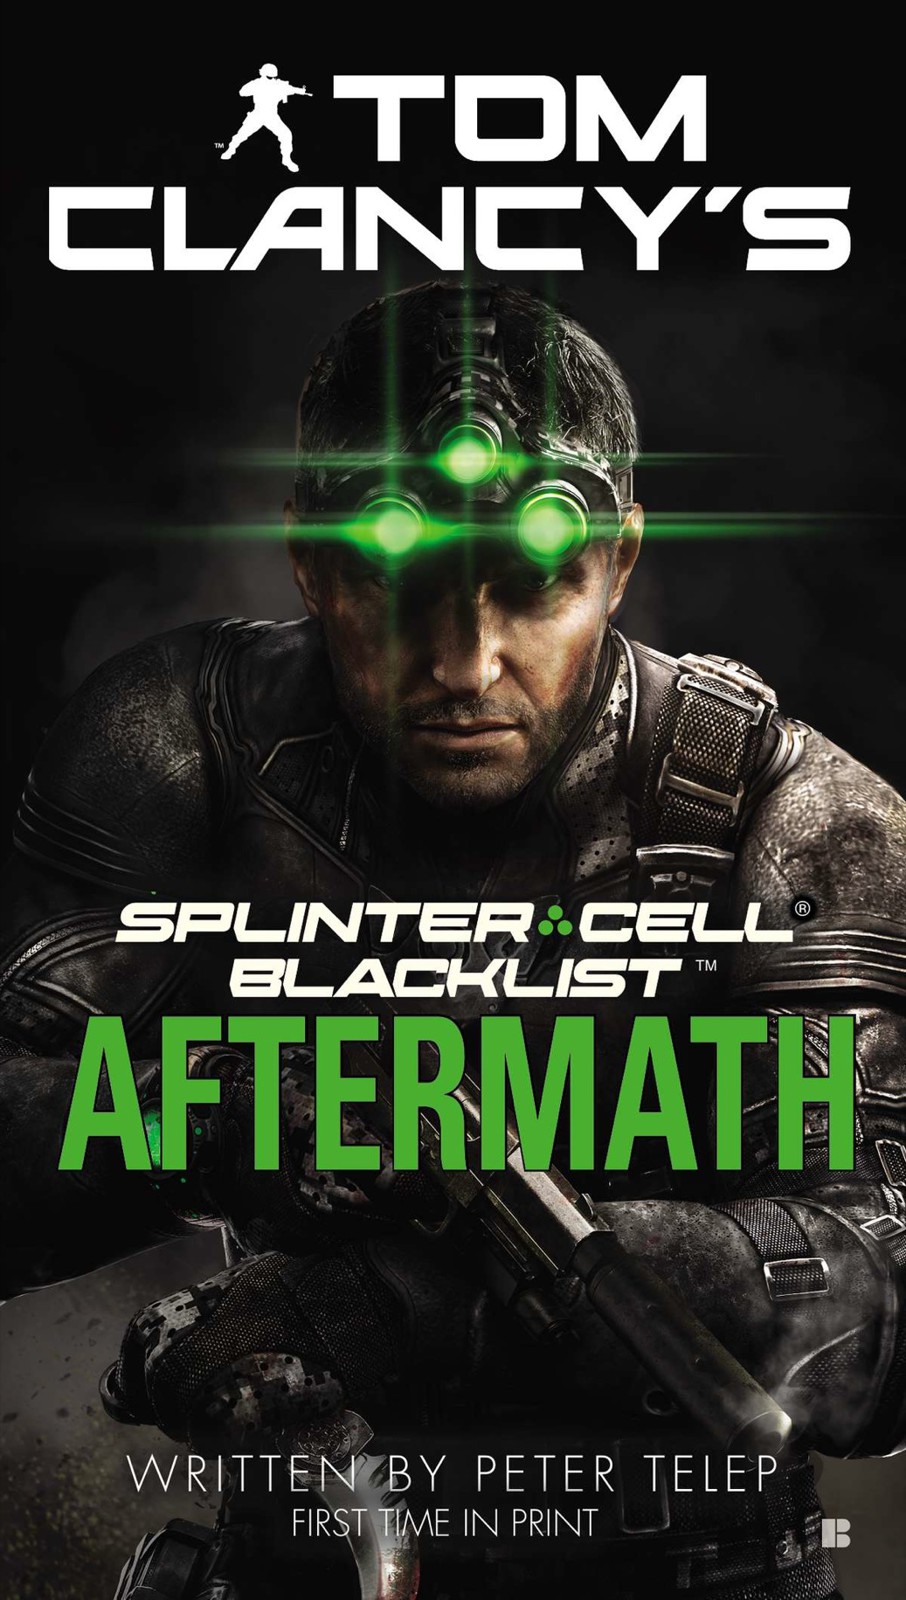 Tom Clancy's Splinter Cell: Pandora Tomorrow Print Ad/Poster Art PS2 (A)